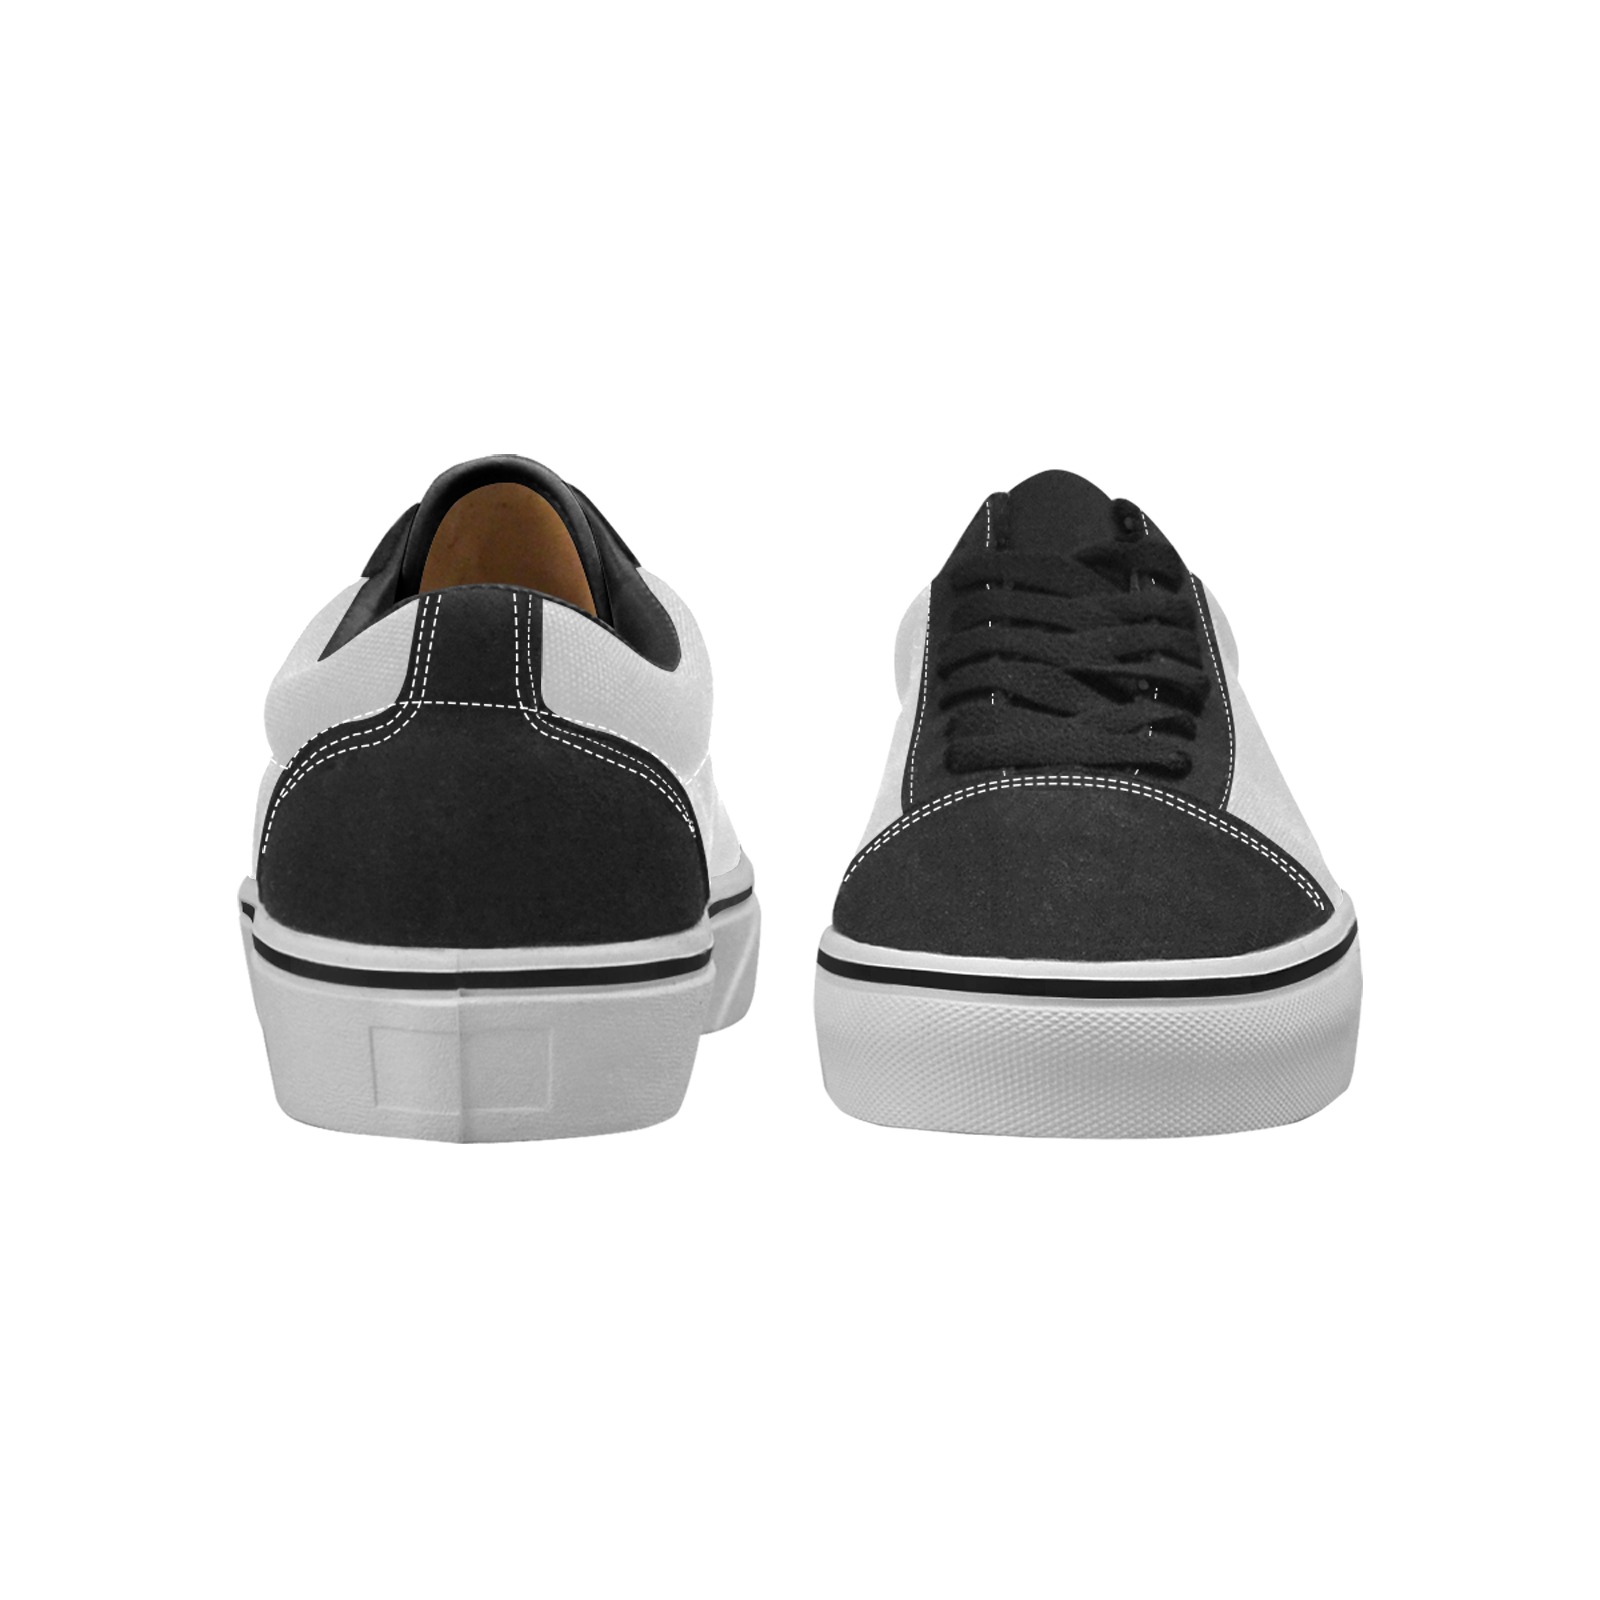 color silver Men's Low Top Skateboarding Shoes (Model E001-2)